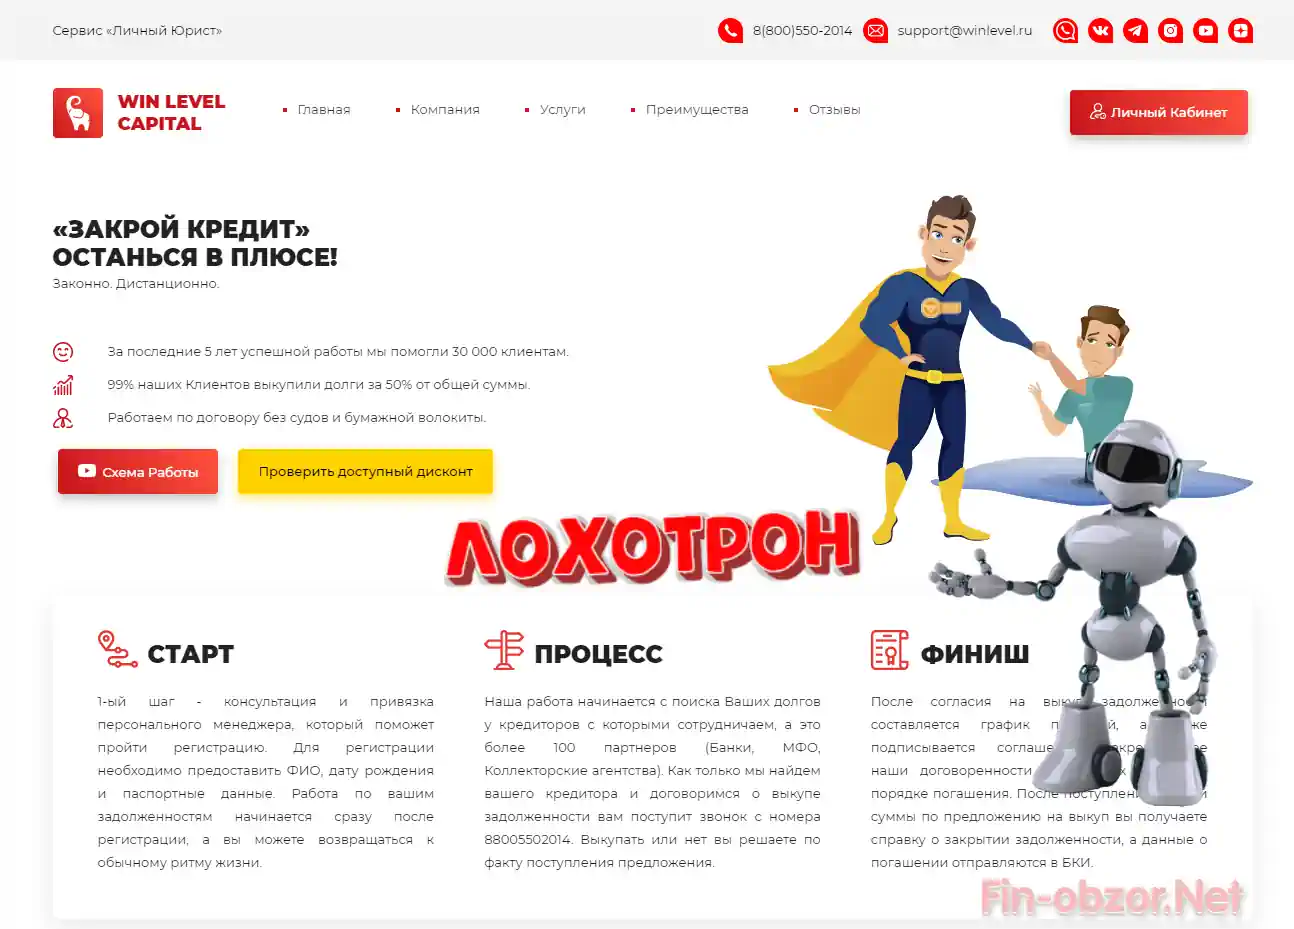 Вин Лэвел Капитал (winlevel.ru) - разбор компании